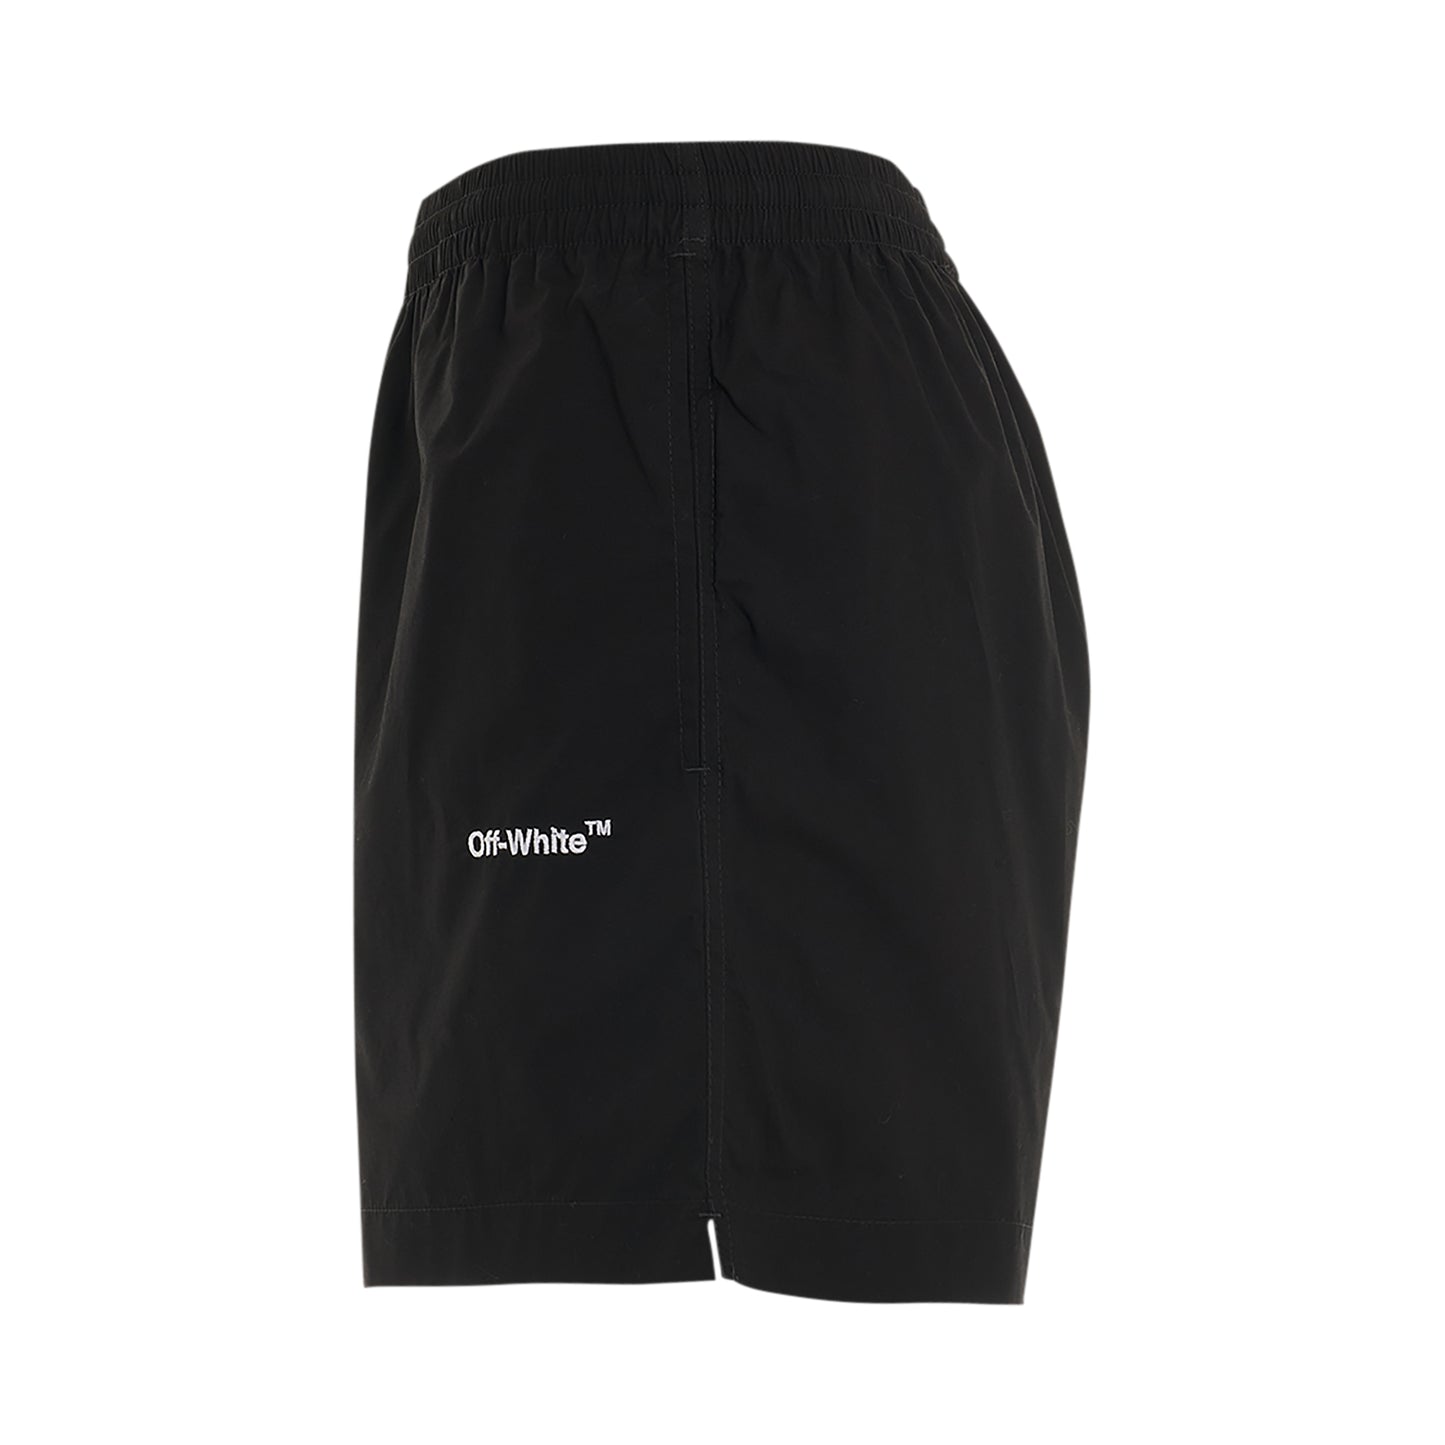 Arrow Outline Pajama Shorts in Black/White